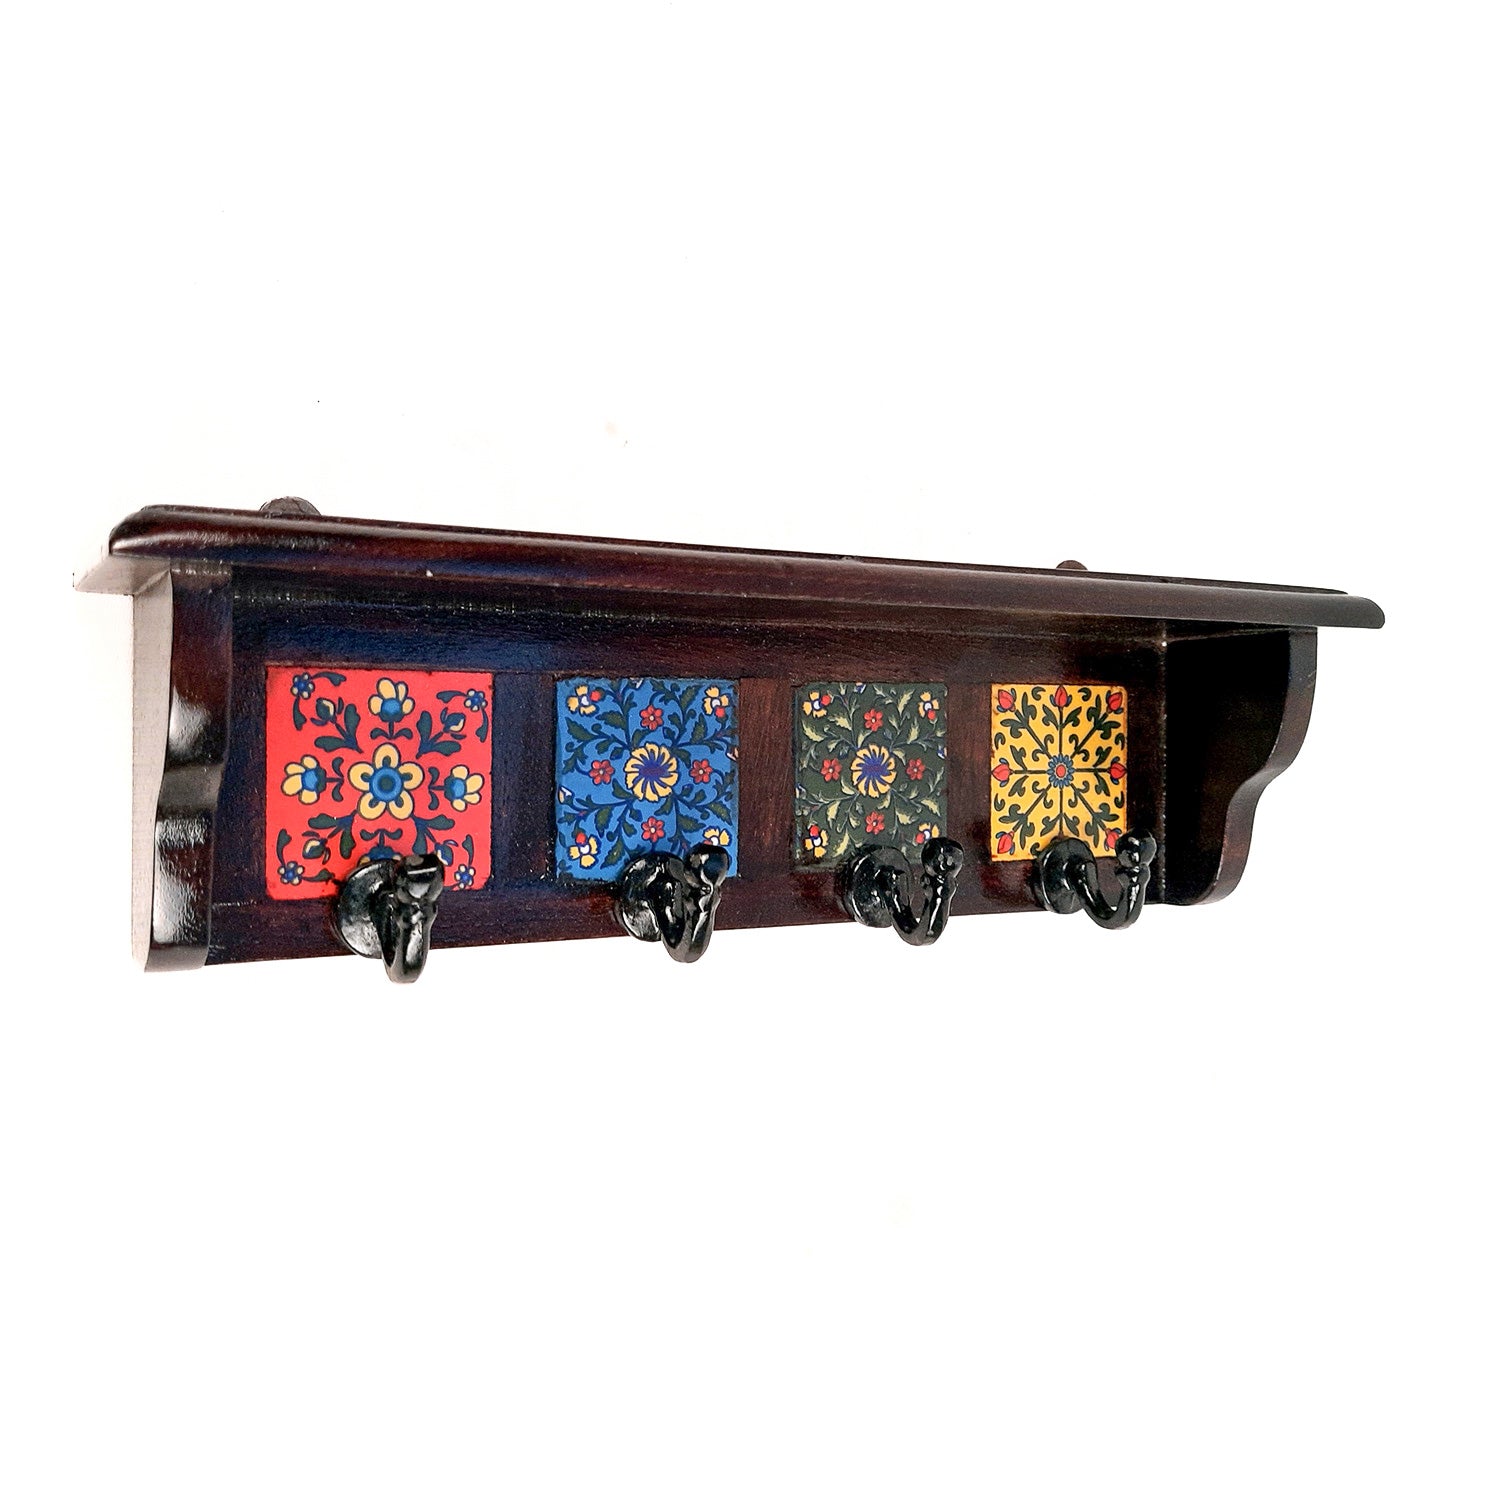 Key Hooks With Wall Shelf | Key Holder Stand With Ceramic Tile Design | Floating Shelves Cum Key Hanger Organiser - For Home, Entrance, Office Decor & Gifts - 12 Inch (4 Hooks) - Apkamart